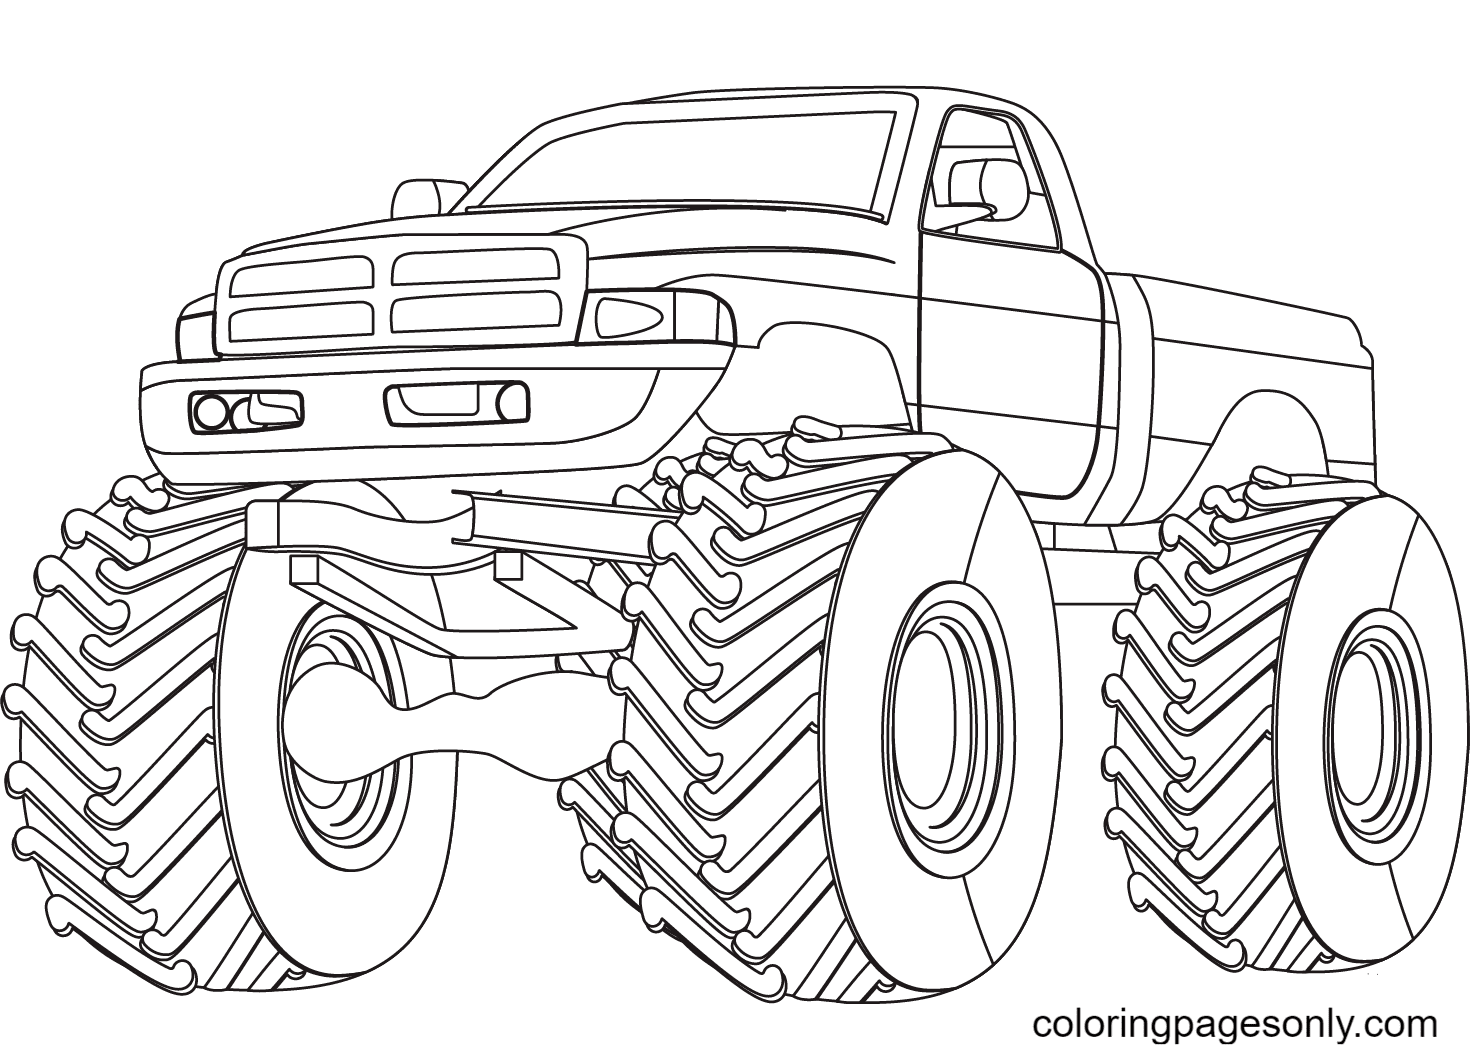 Coloriage Monster Truck à grosses roues